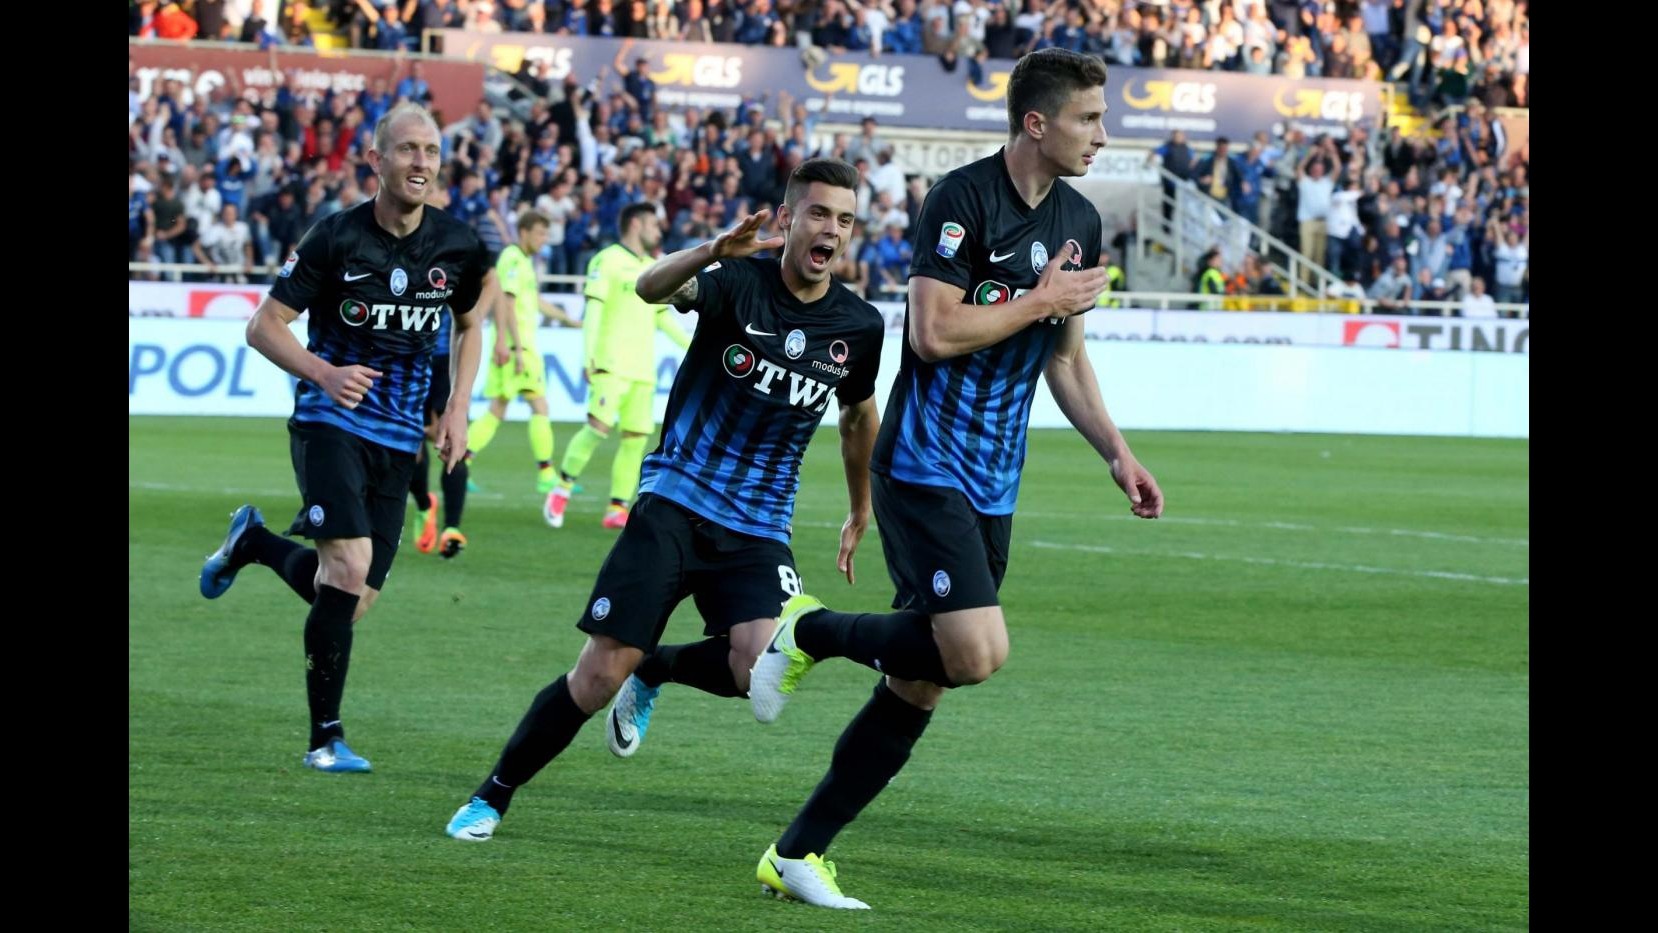 FOTO Serie A, Atalanta supera Bologna 3-2